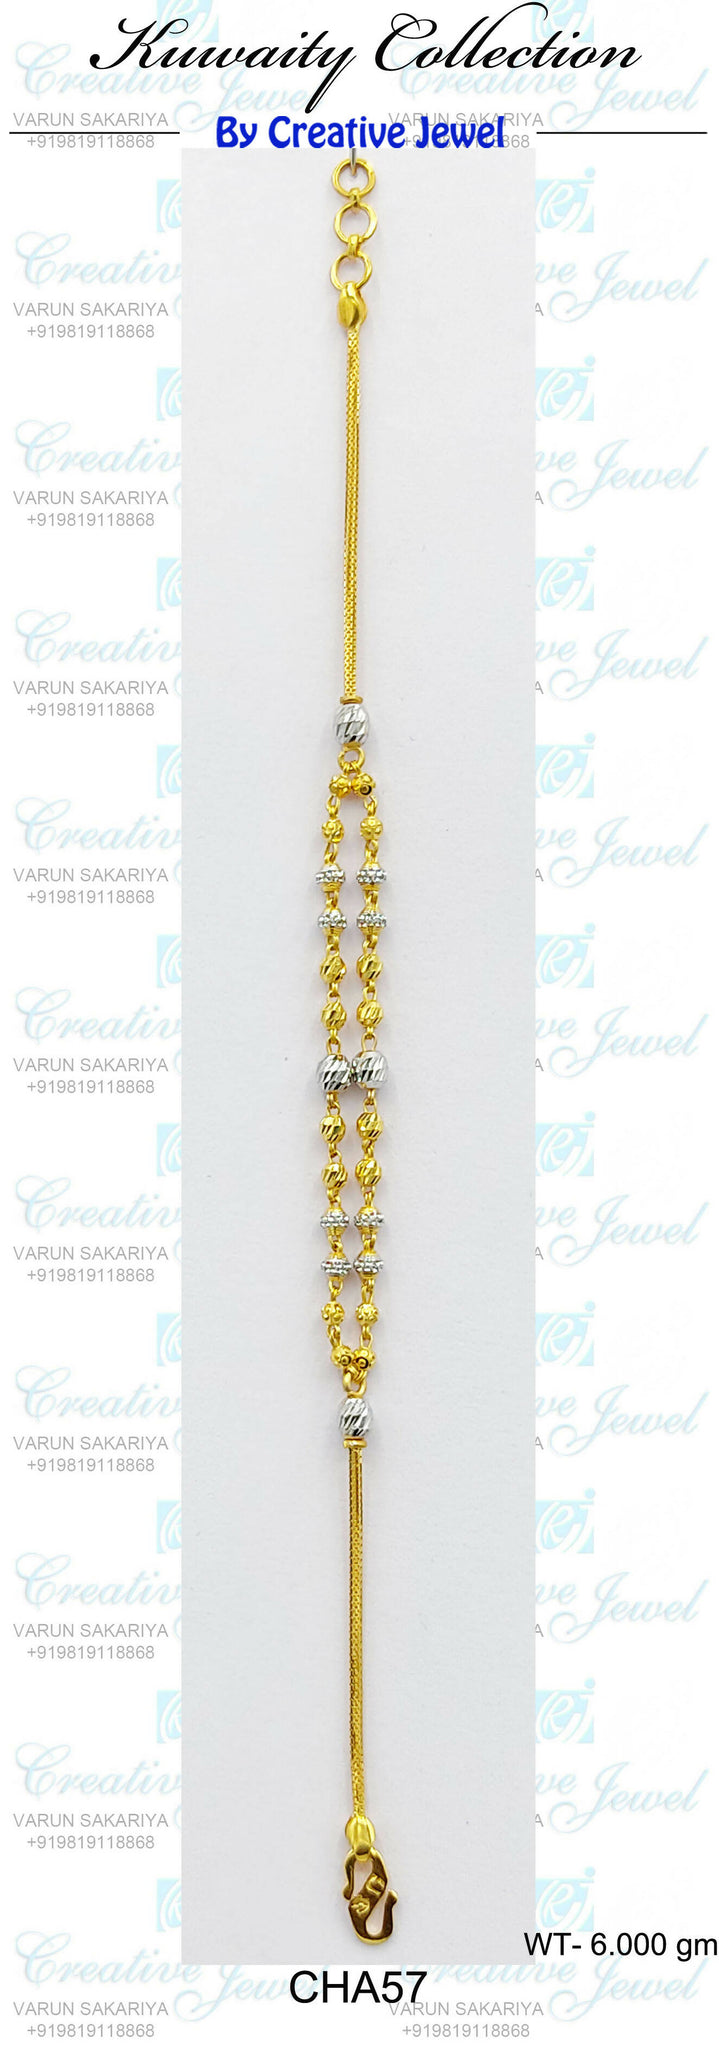 Saved by radha reddy garisa | Gold bracelet simple, Gold jewelry simple,  Gold jewelry simple necklace